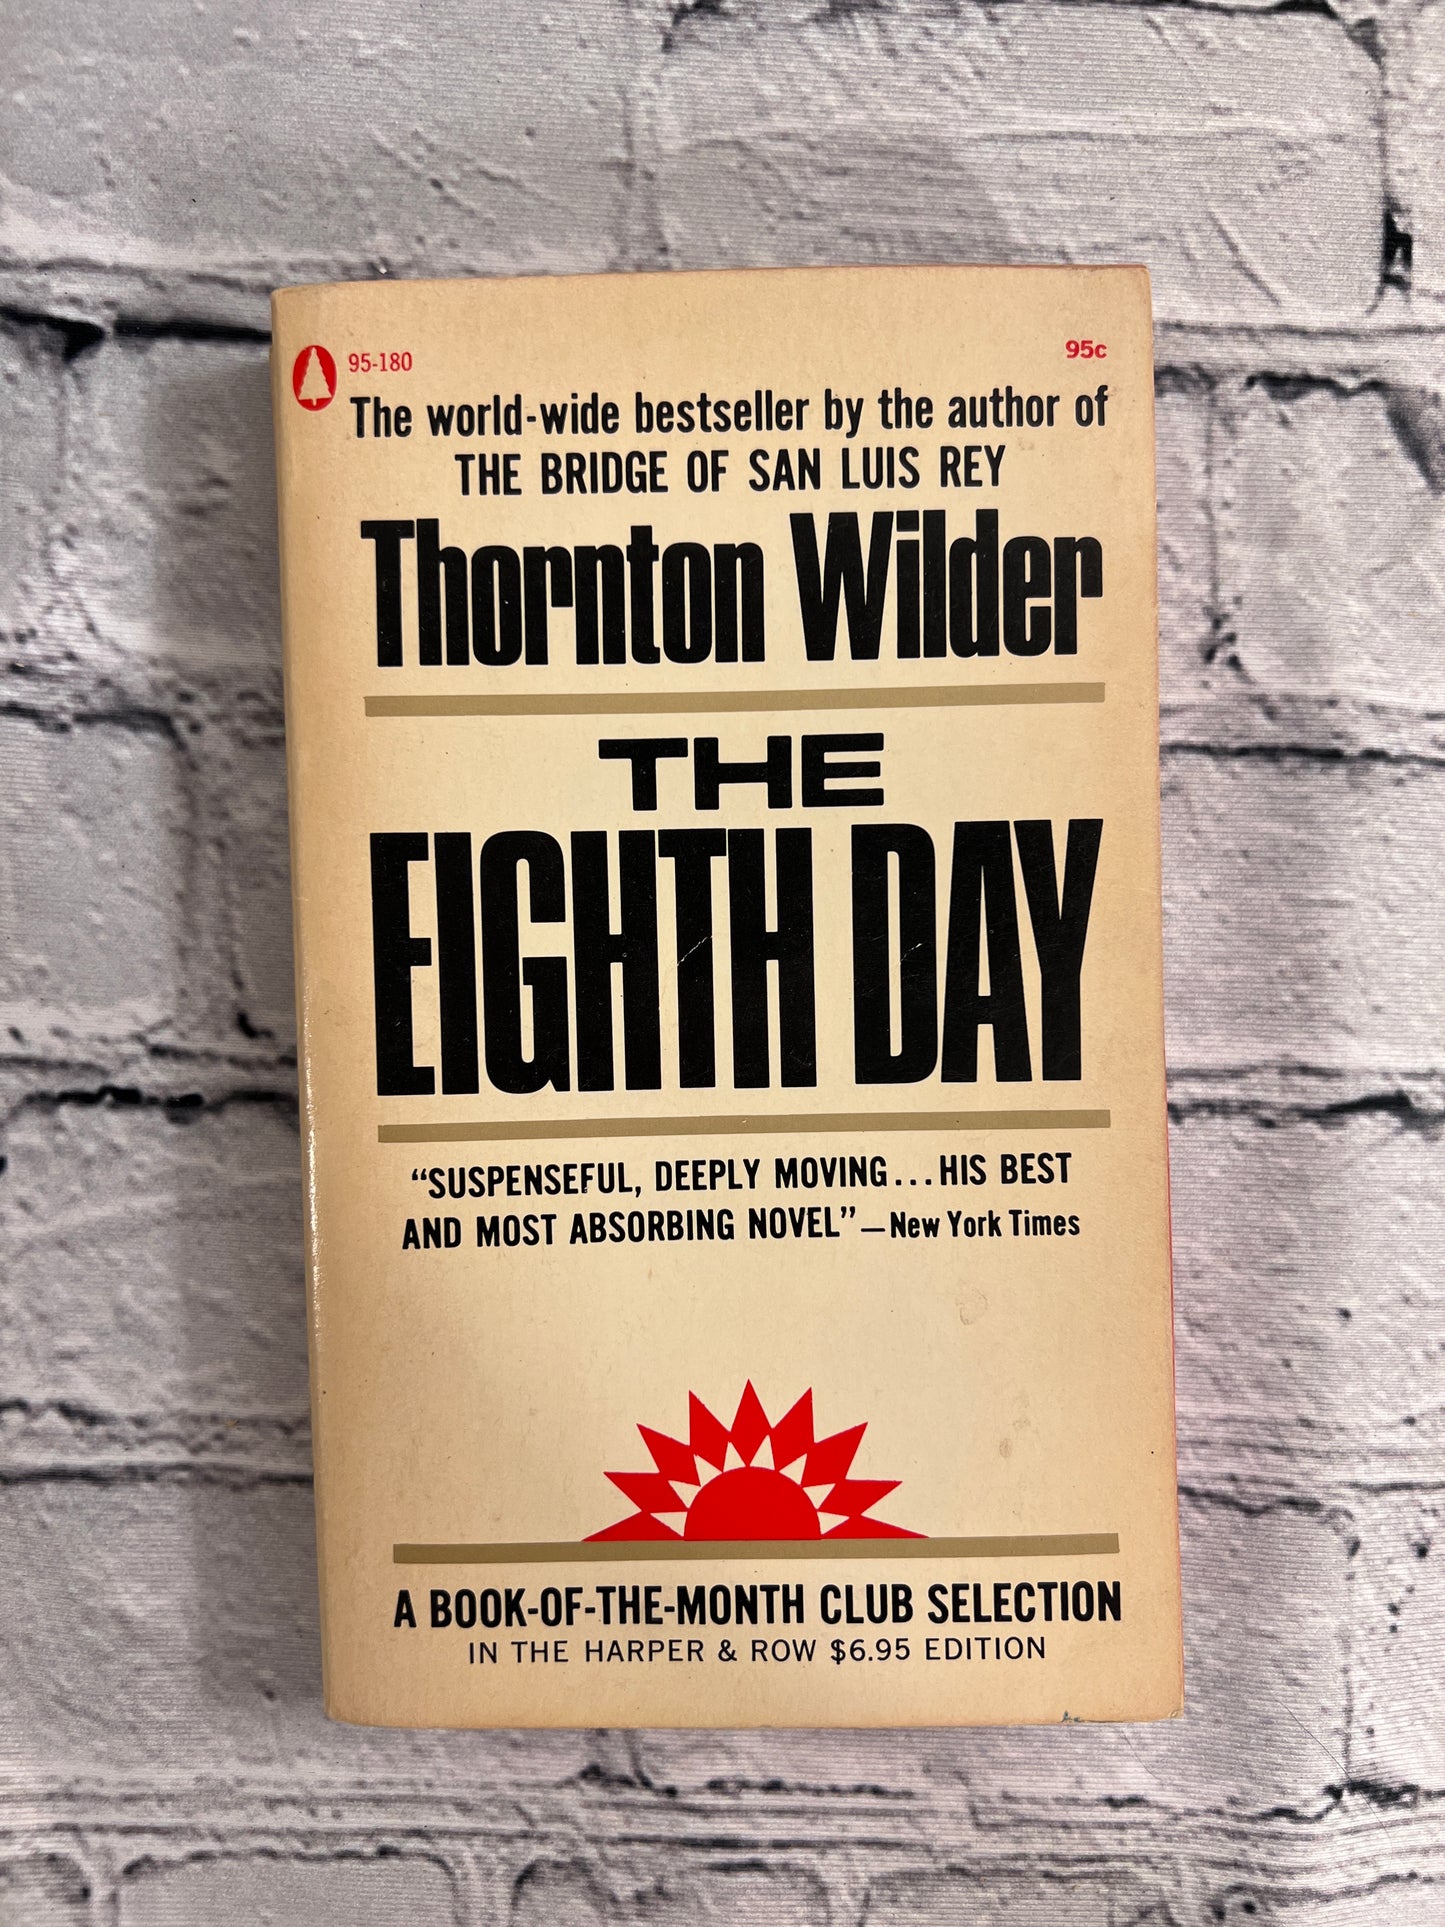 The Eighth Day by Thornton Wilder